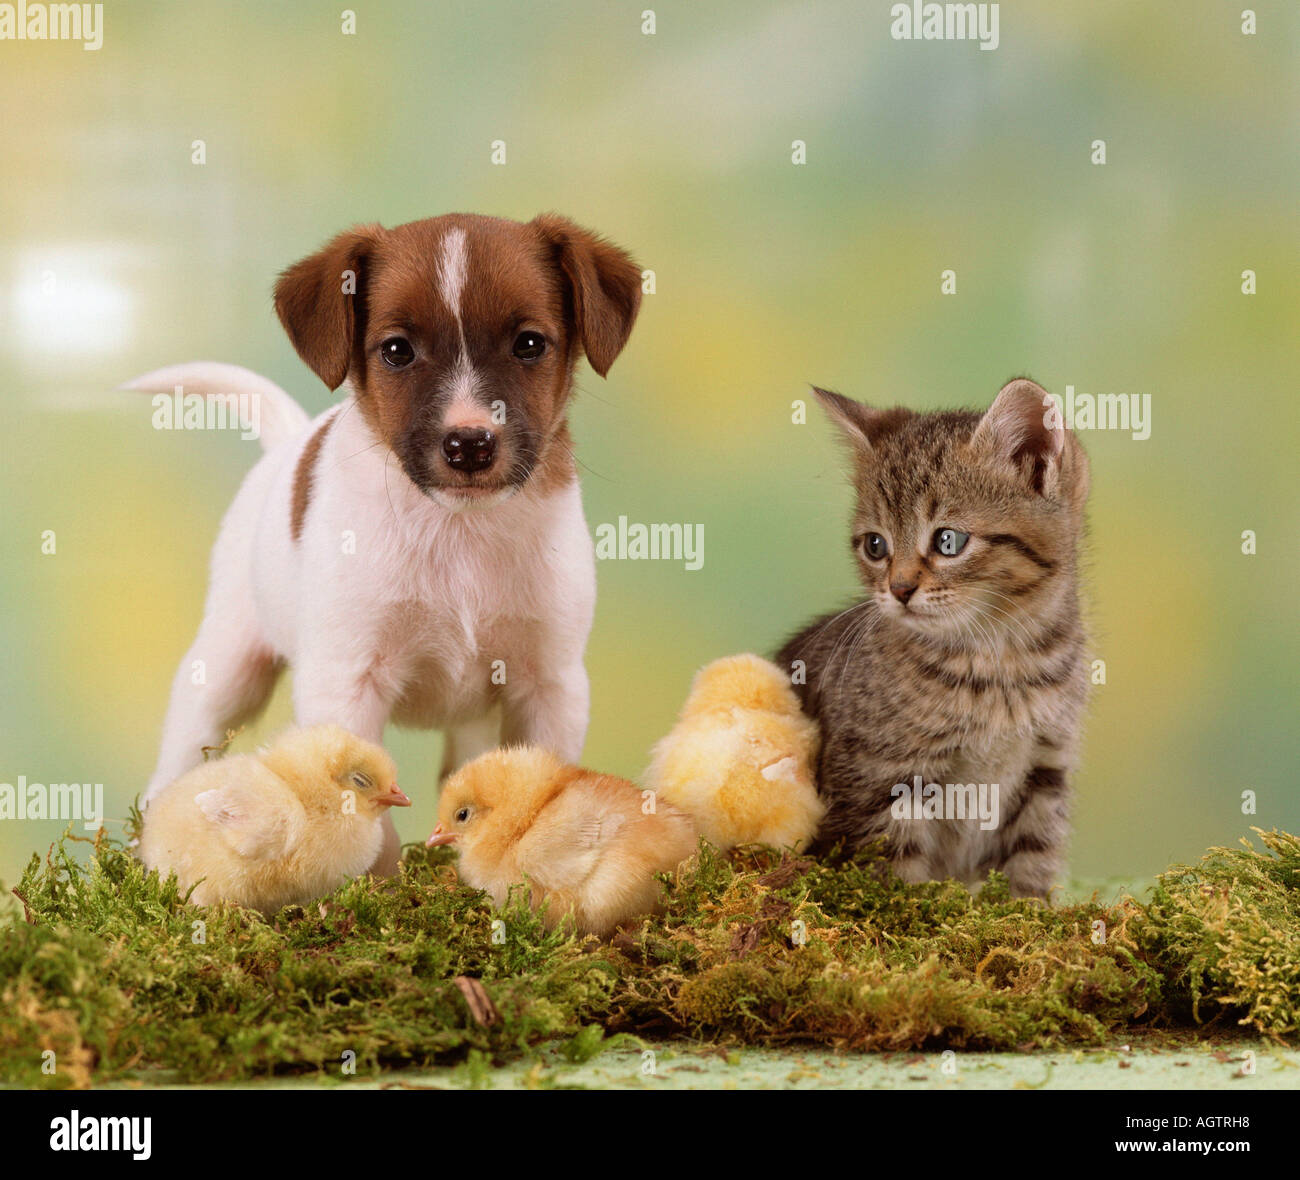 Küken, Hund und Katze Stockfotografie - Alamy